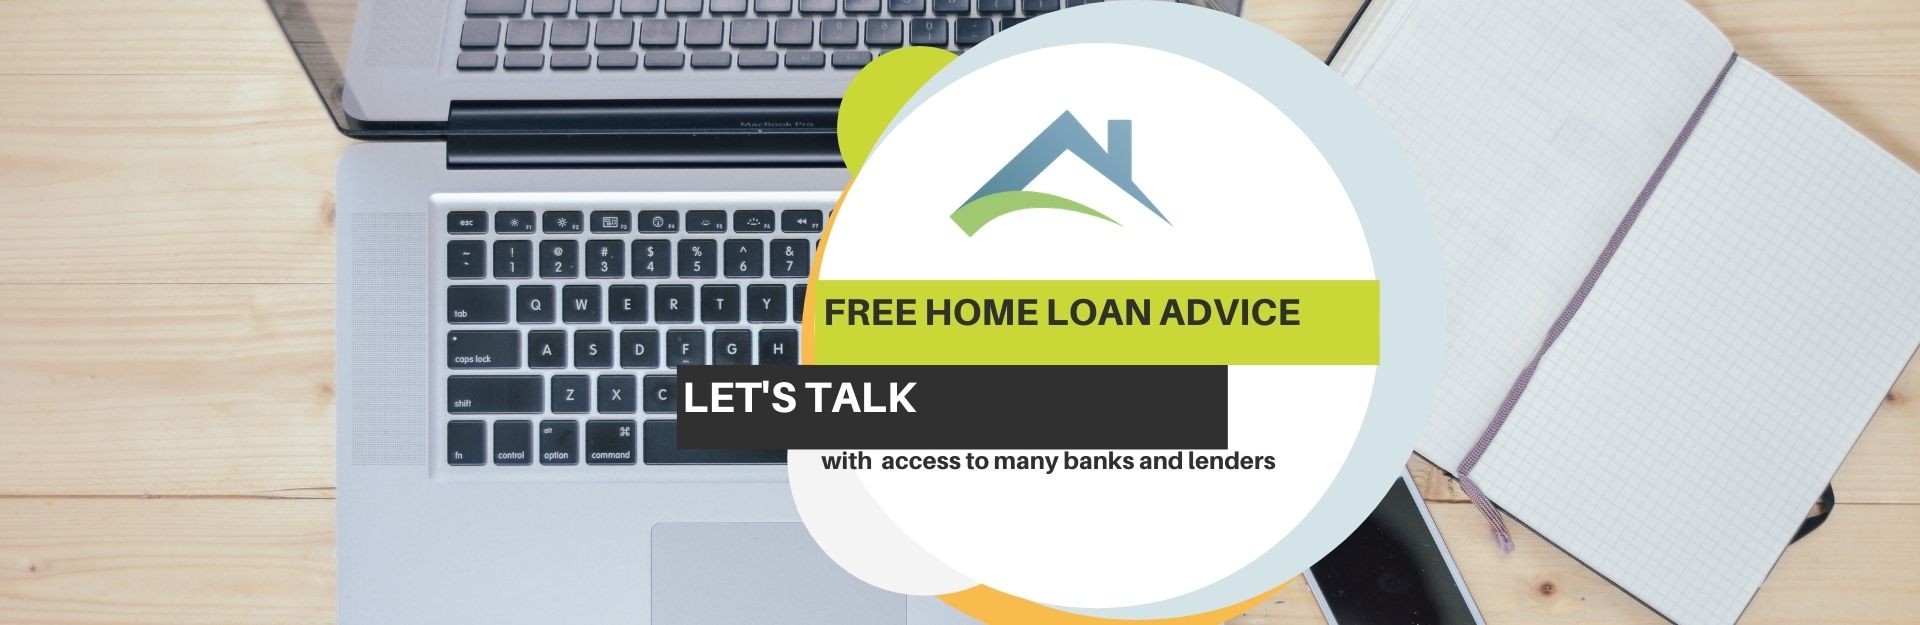 Free_Home_Loan_Advice.jpg